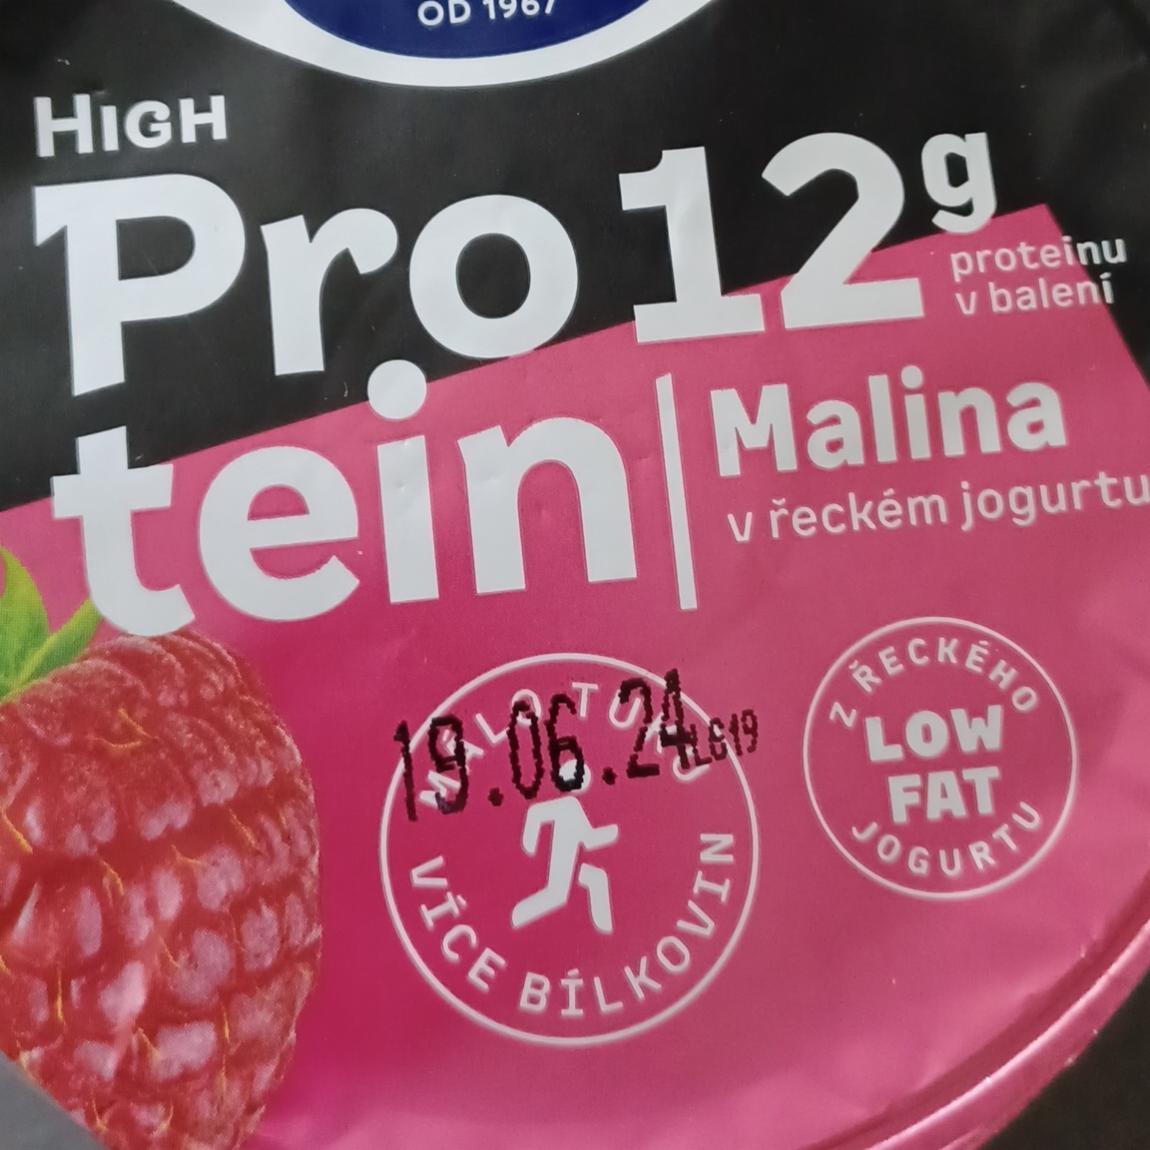 Fotografie - High protein 12g malina v řeckém jogurtu Olma